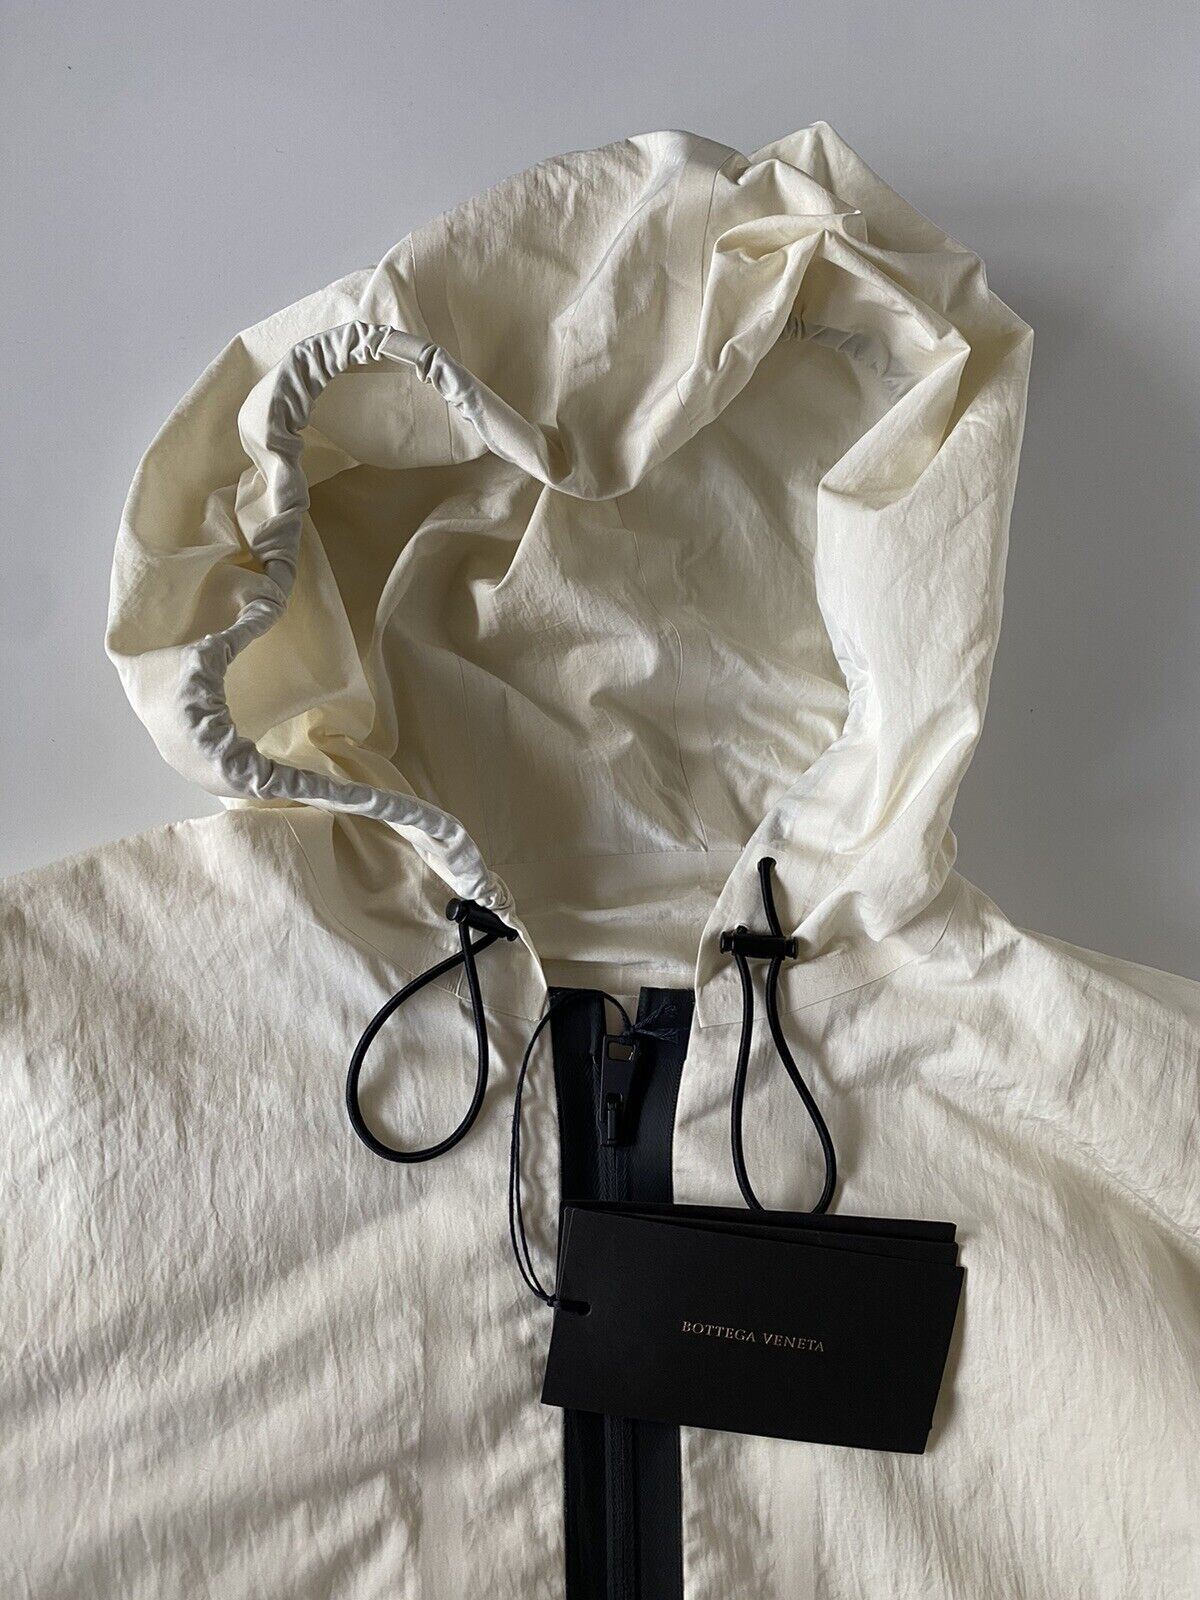 NWT $1850 Bottega Veneta Men's Blouson Tech Nylon Chalk Jacket with Hoodie 42 US